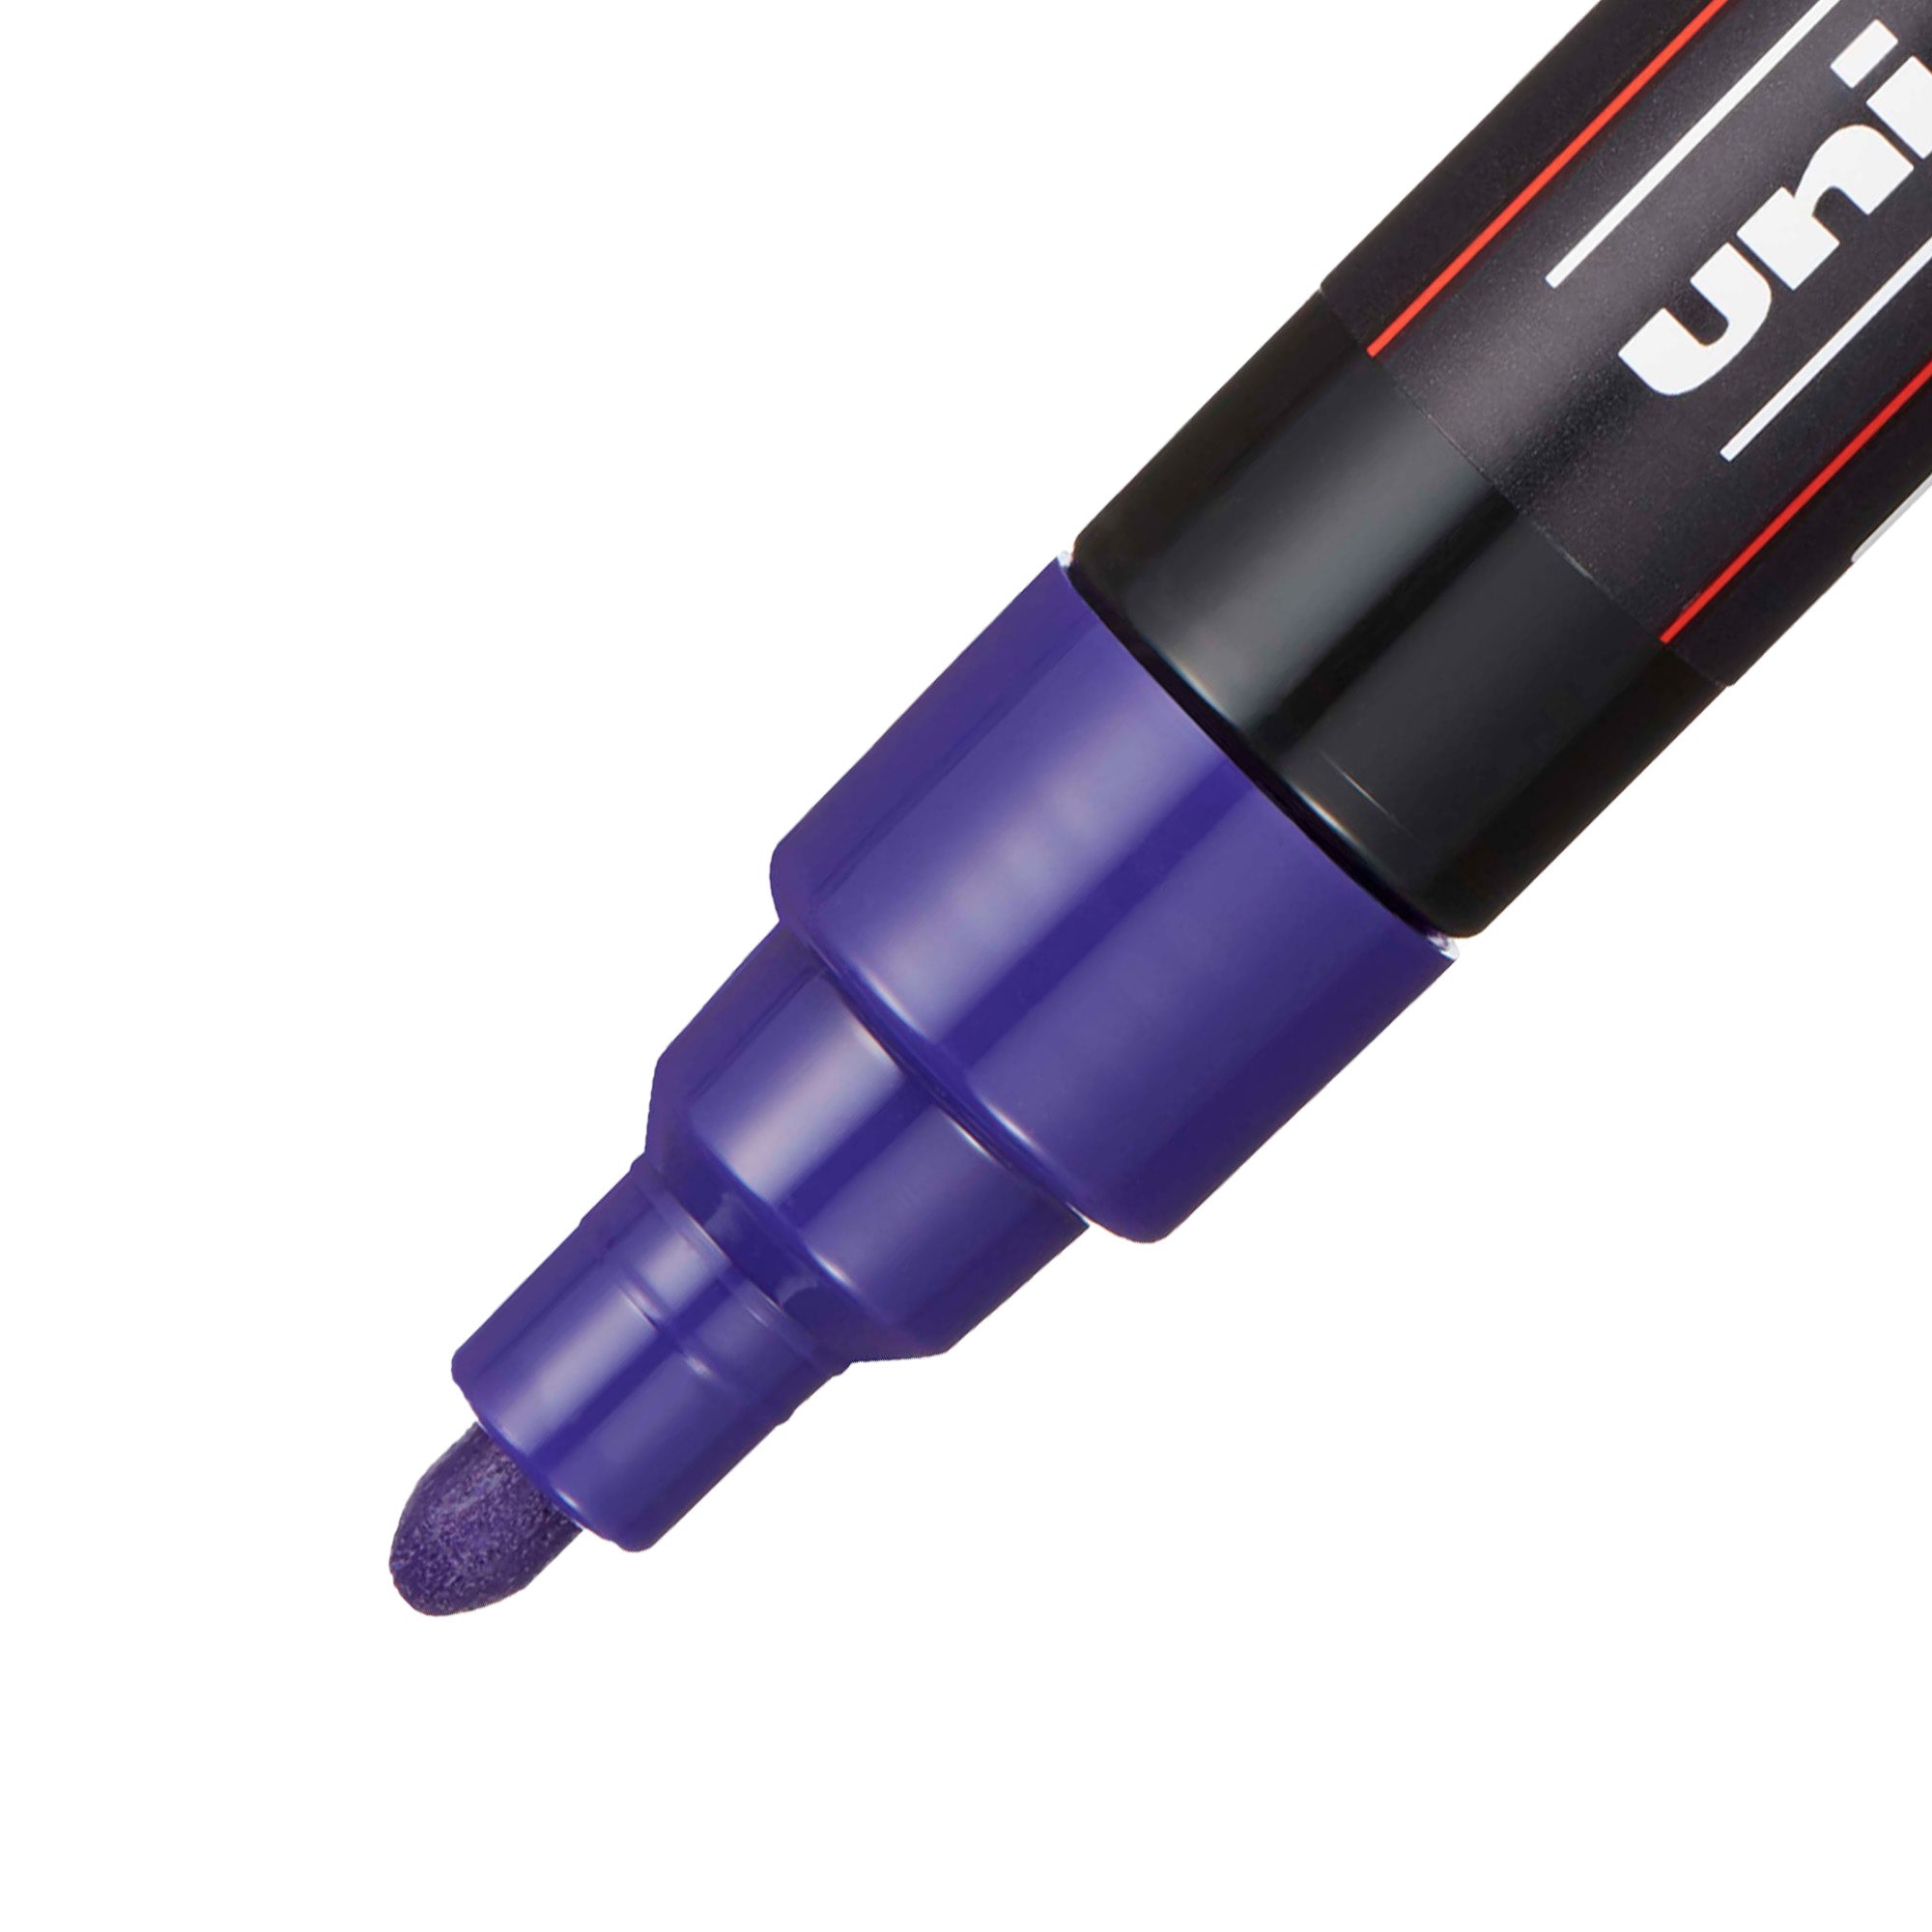 Posca PC-5M Medium Dark Color Paint Marker Set (8-Color)